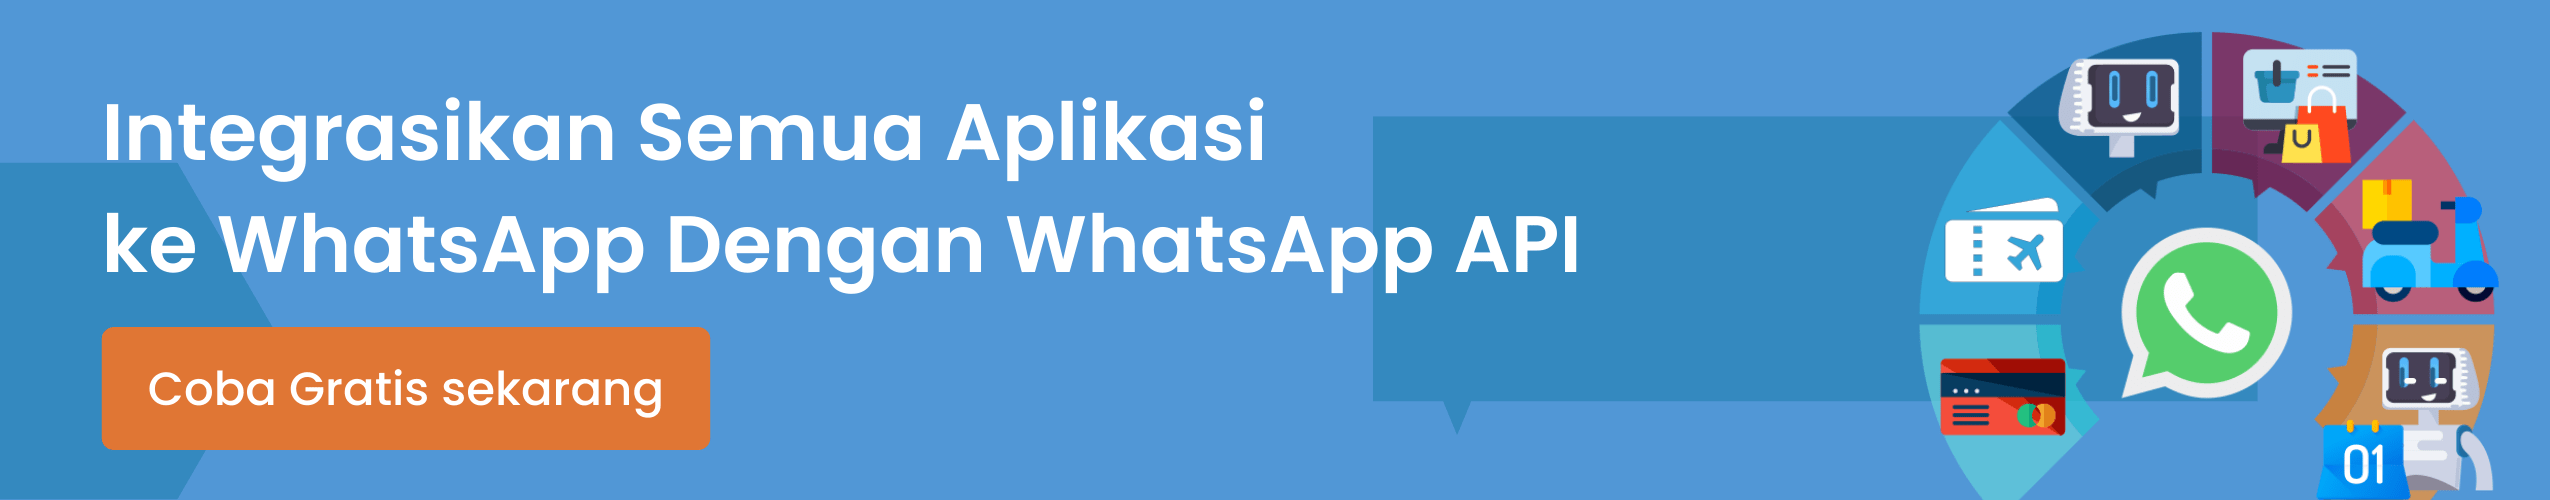 WhatsApp Business Solution Provider